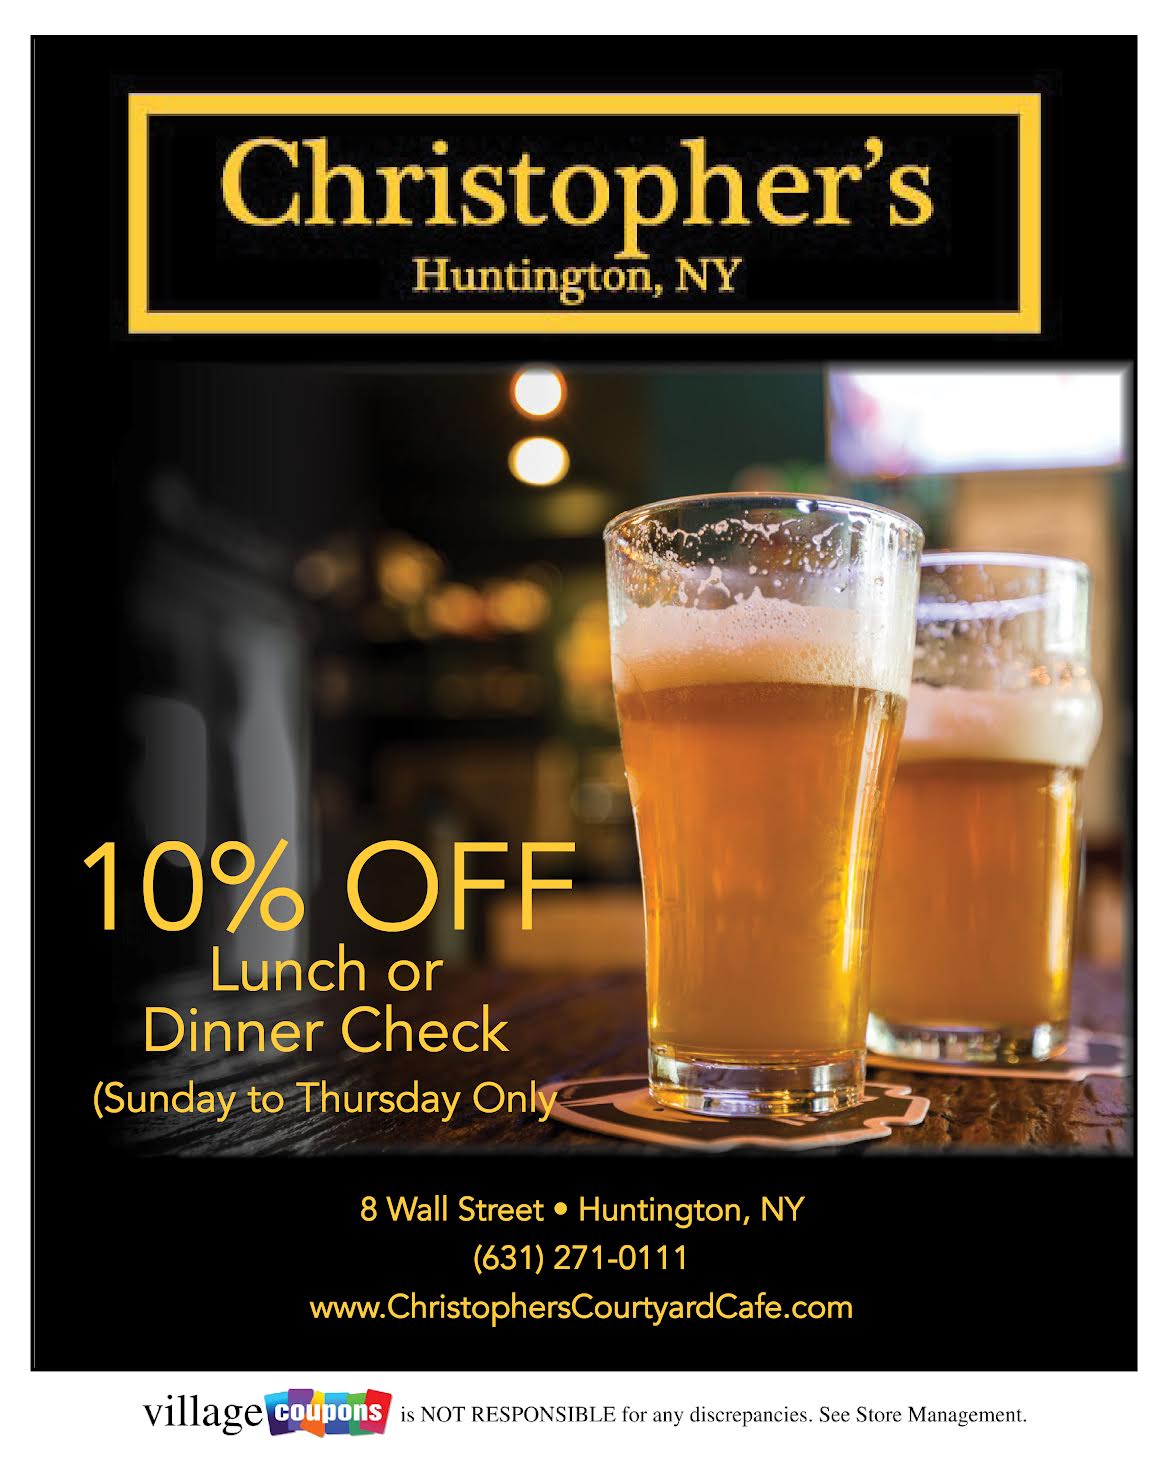 An advertisement for christopher 's restaurant in huntington new york